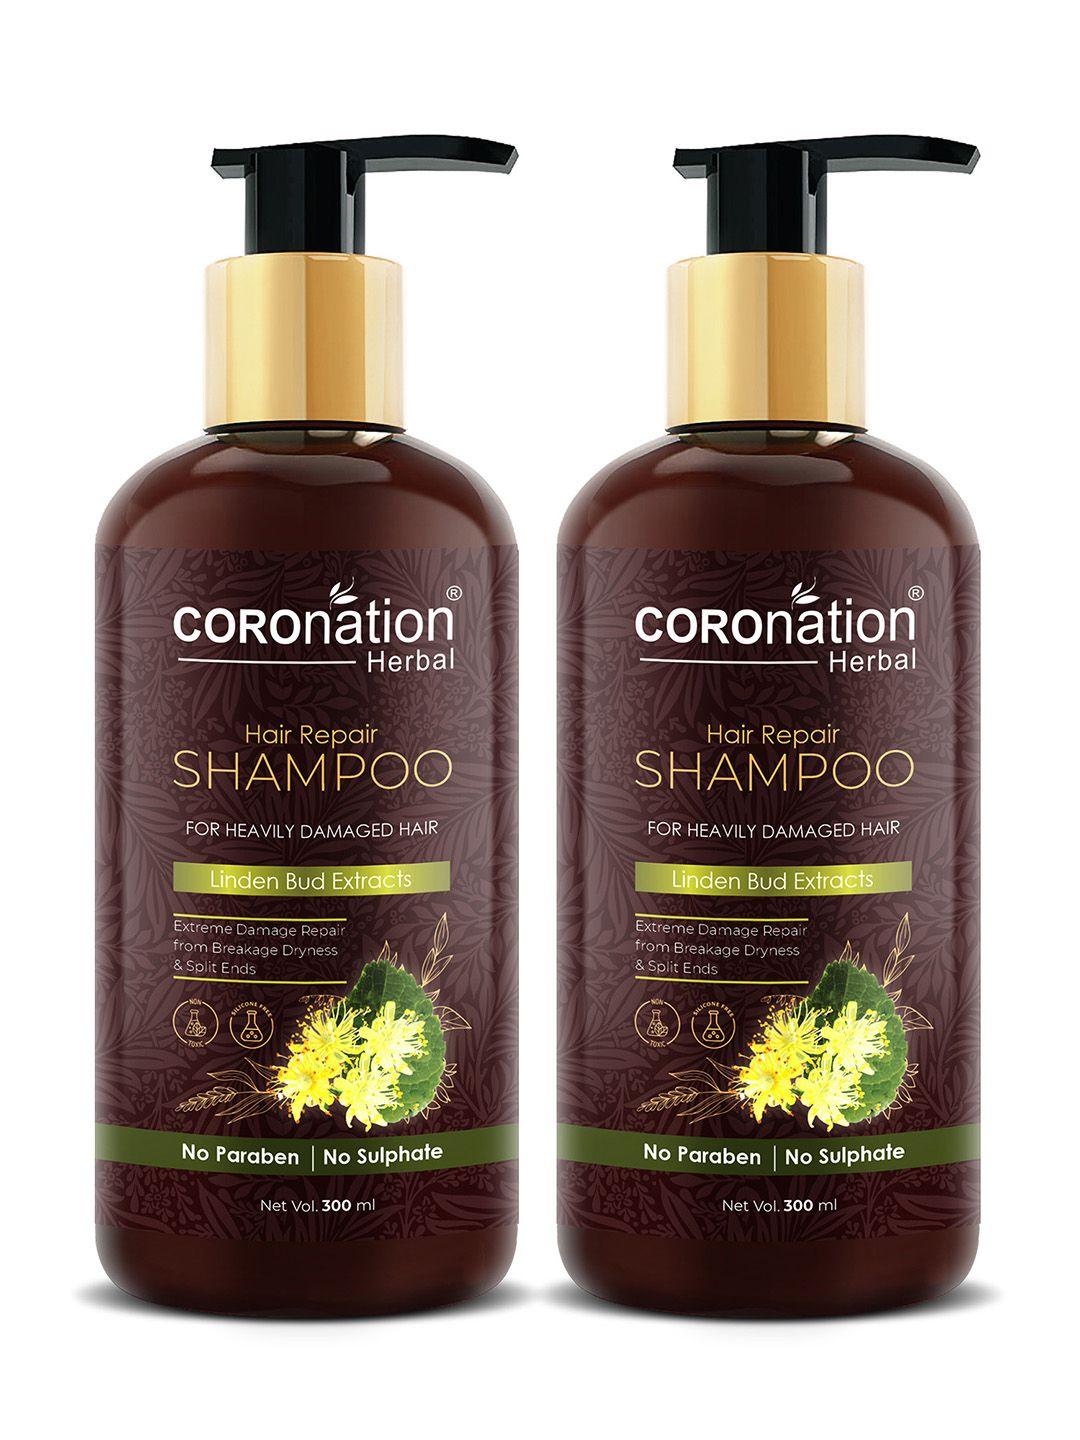 coronation herbal set of 2 linden bud extracts hair repair shampoo 300 ml each